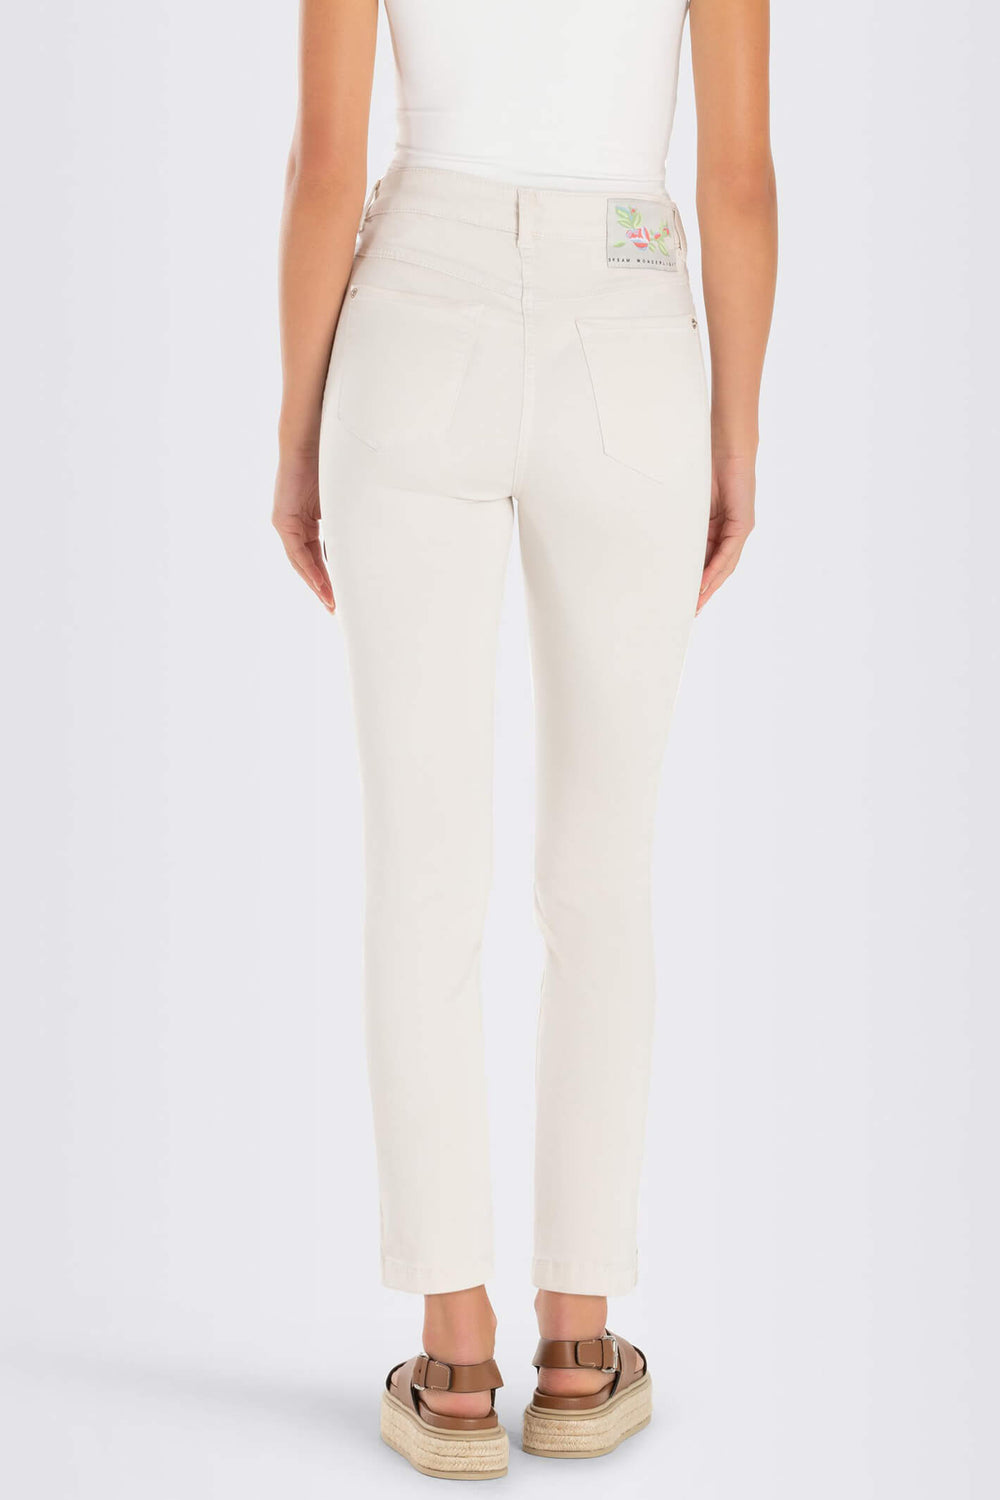 Mac Dream Summer 5495-00-0425L Antique White Cotton Jeans - Olivia